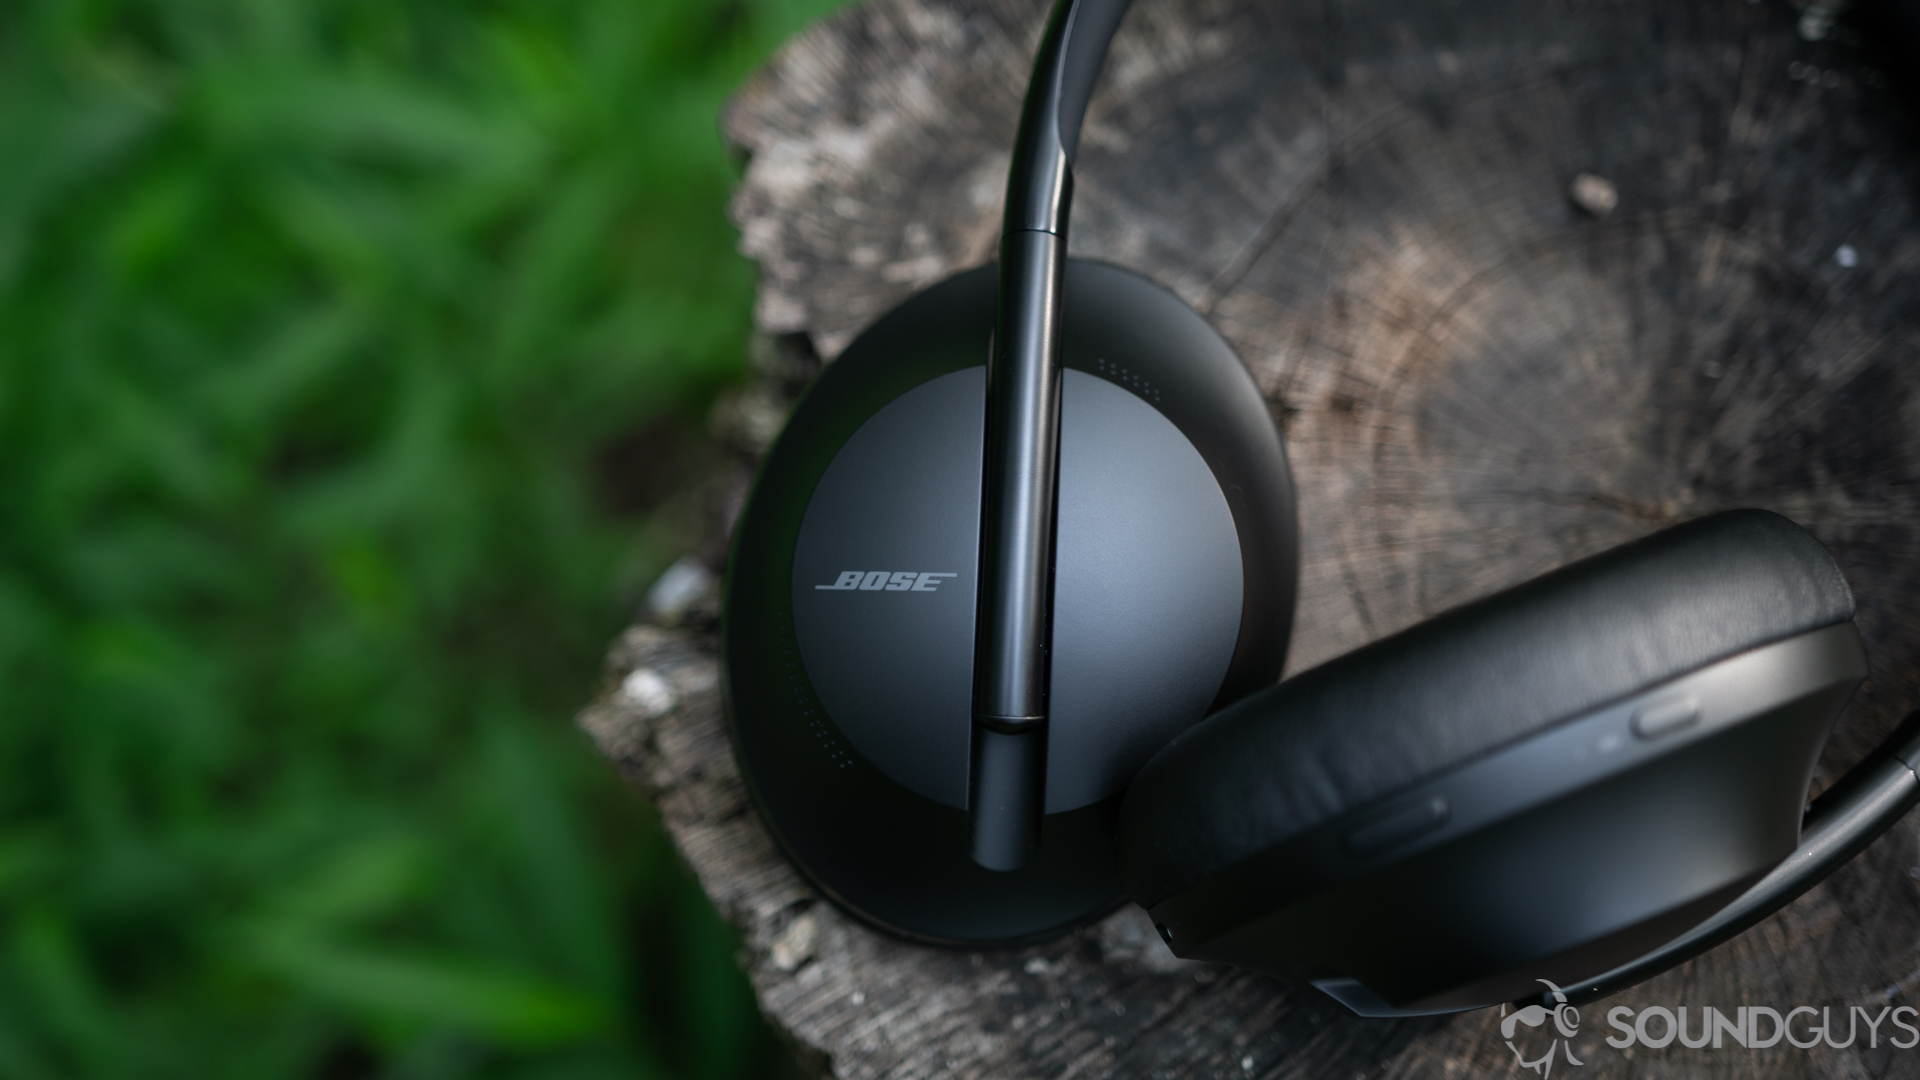 Bose QuietComfort Headphones vs Bose QuietComfort 45 - SoundGuys